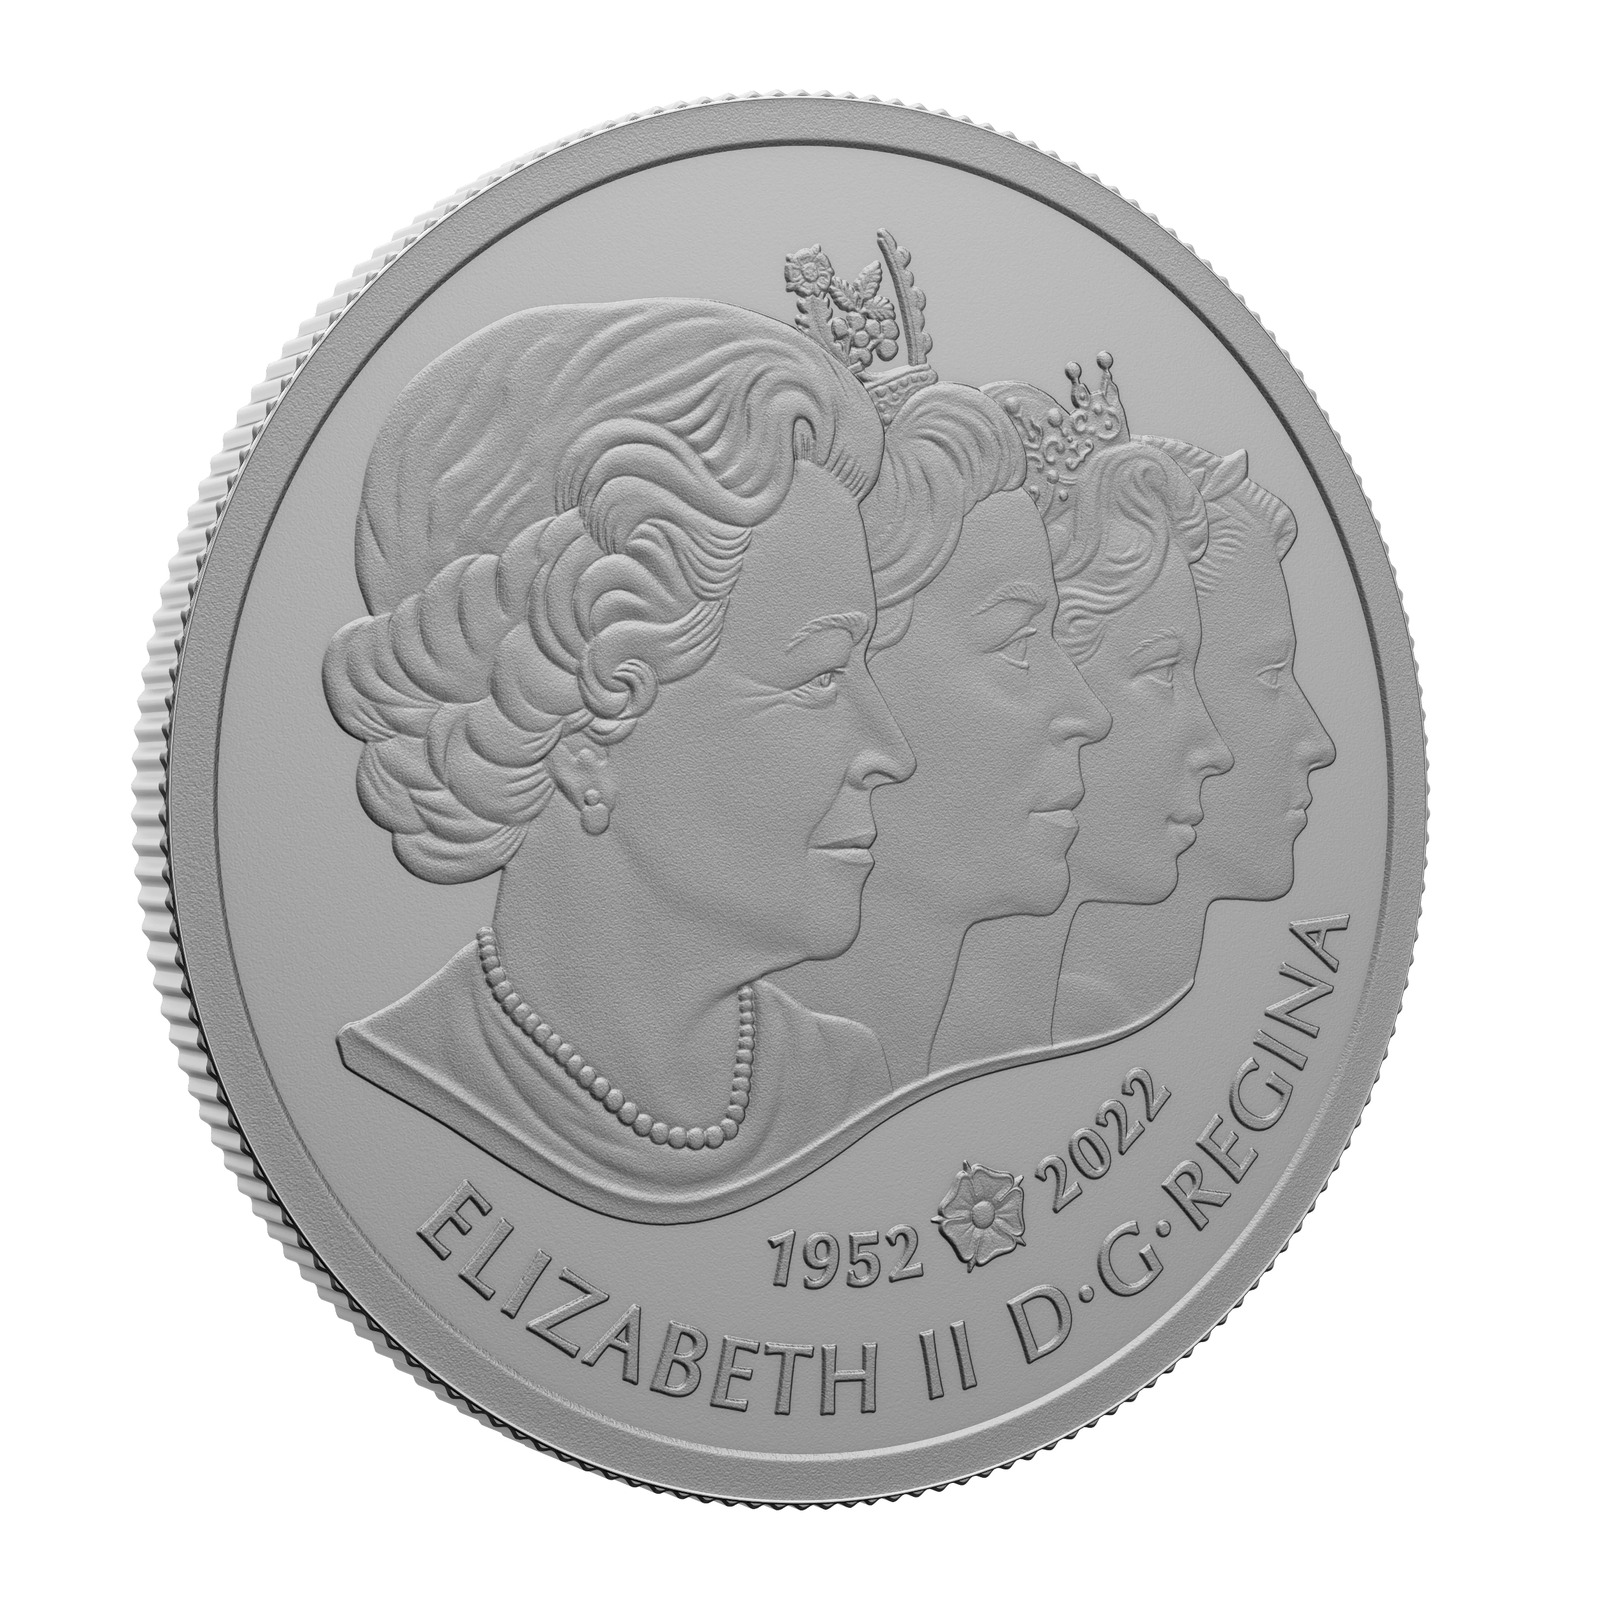 Portrait of Queen Elizabeth II Canada $5 Silver Coin | Royal Canadian Mint